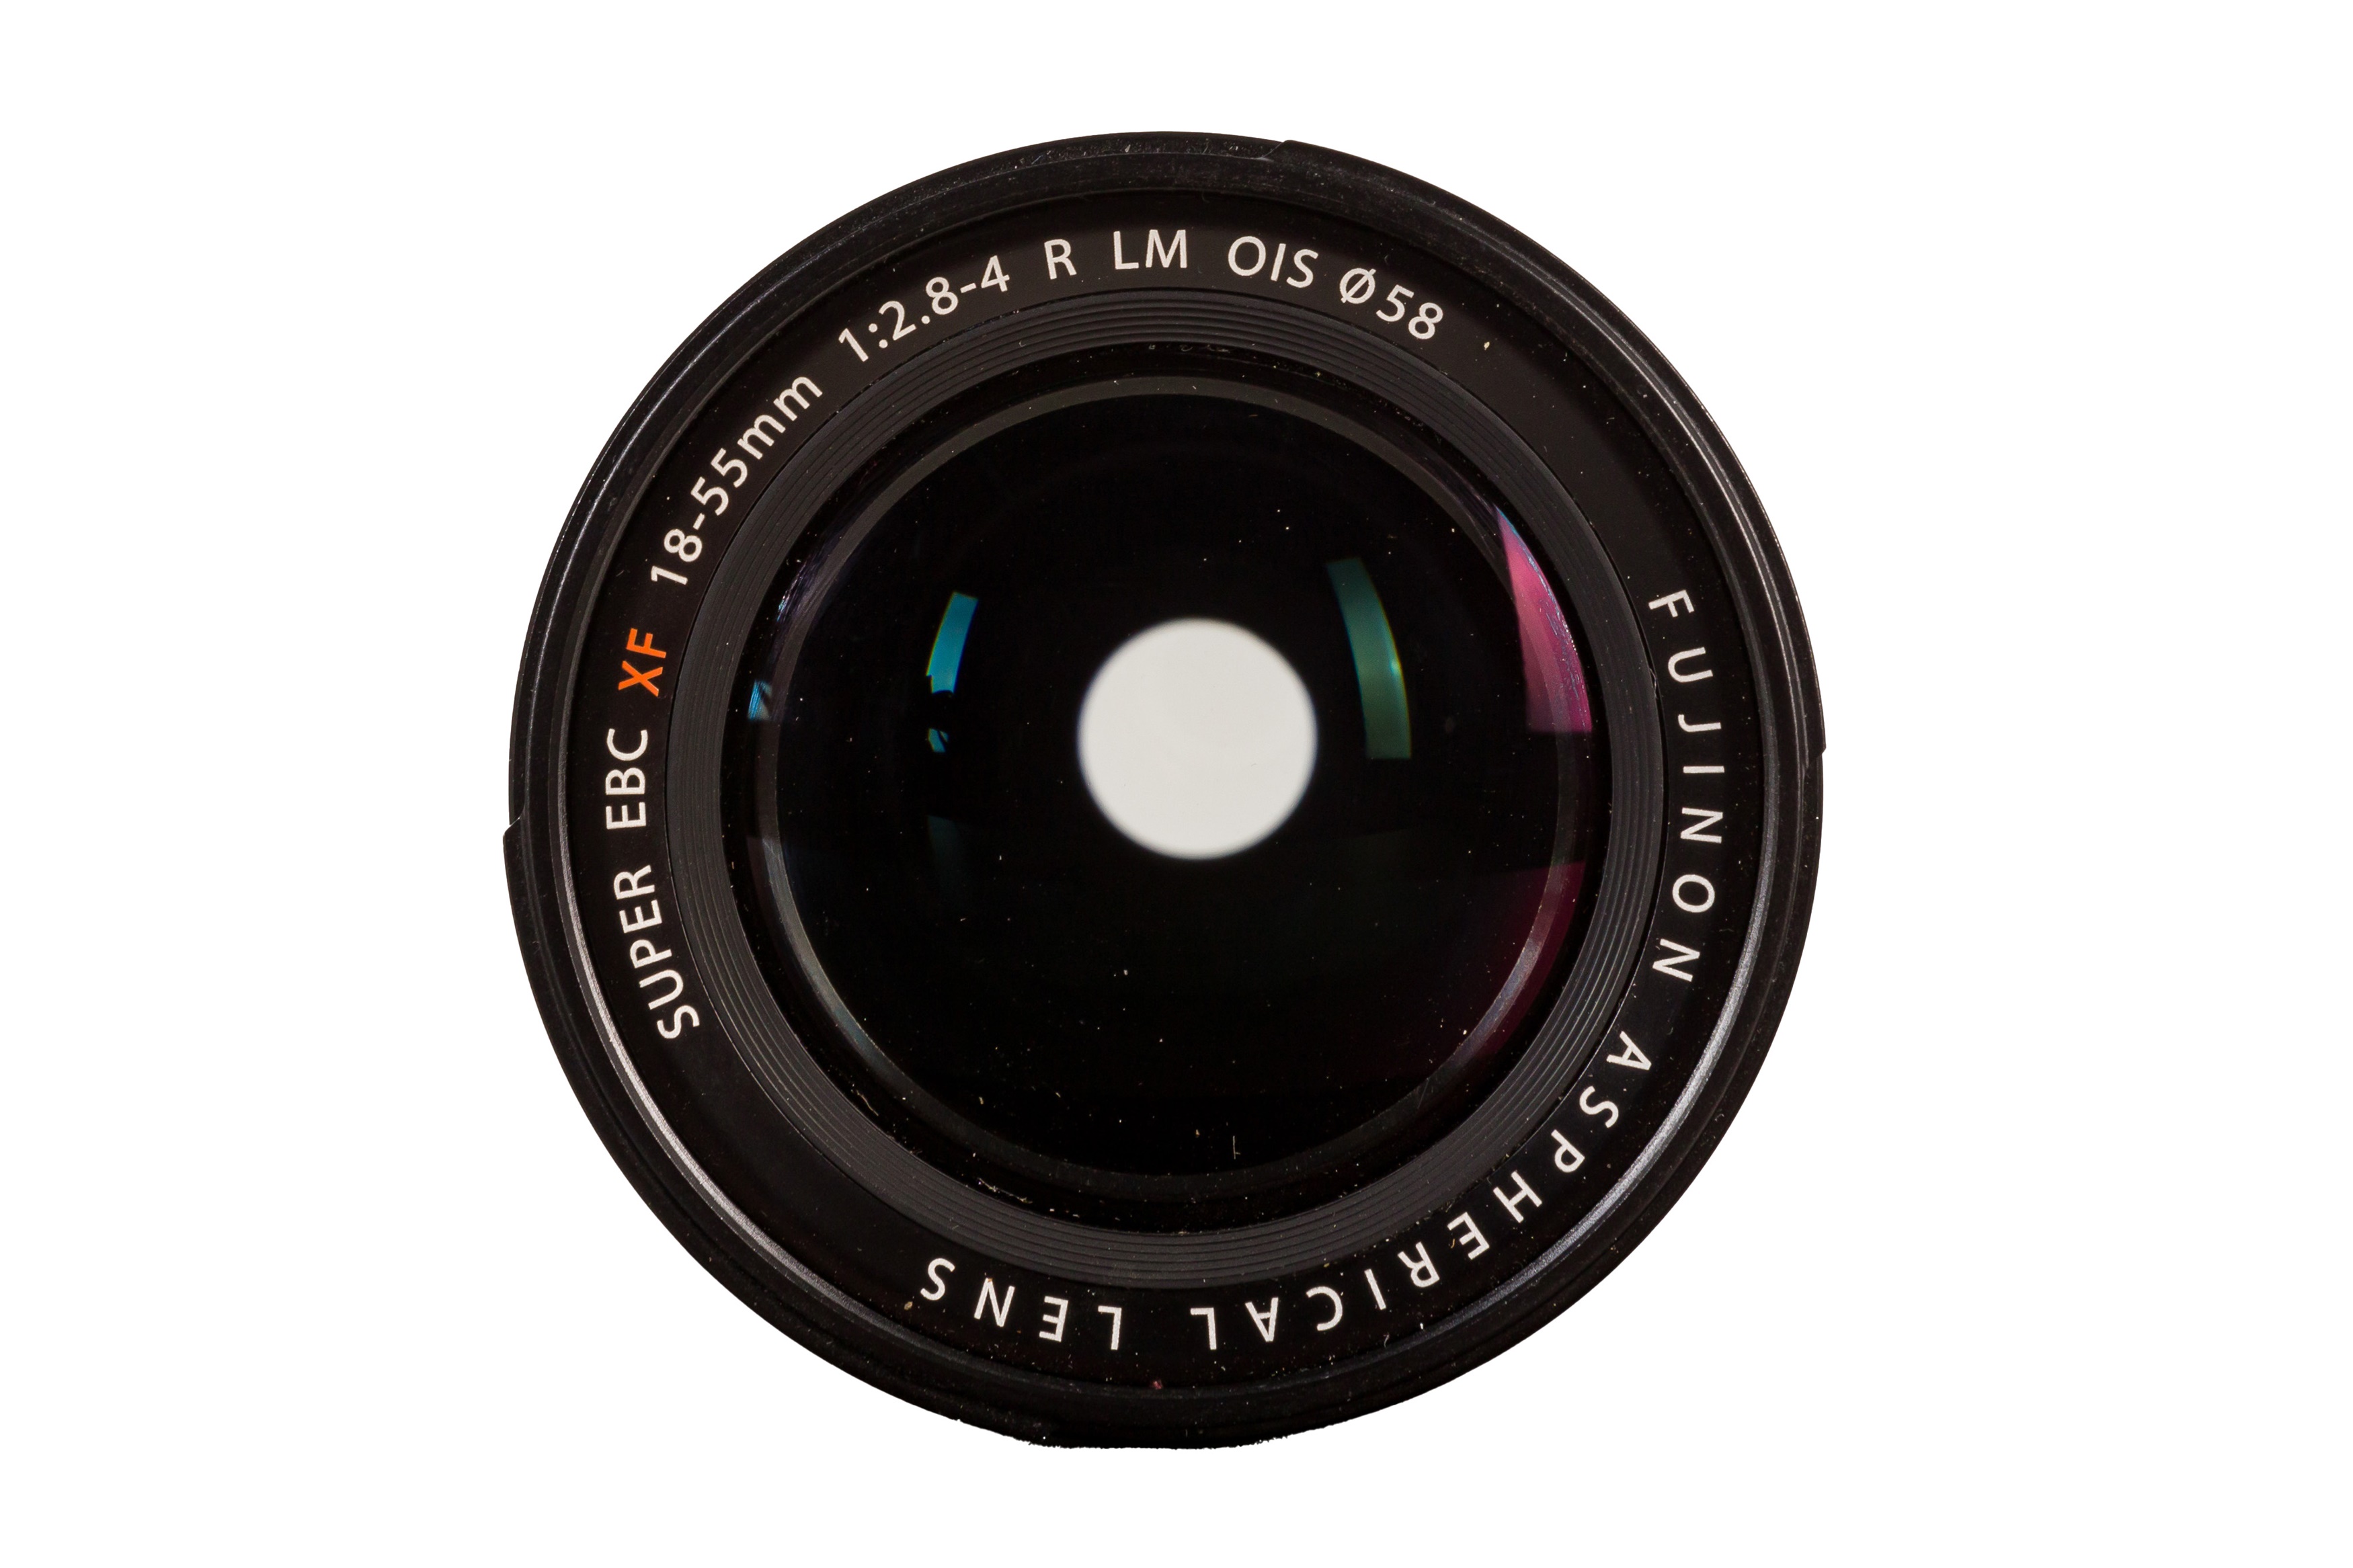 A Fuji X-Pro 1 Digital Mirrorless Rangefinder Camera with Various Lens Adapters - Image 6 of 7